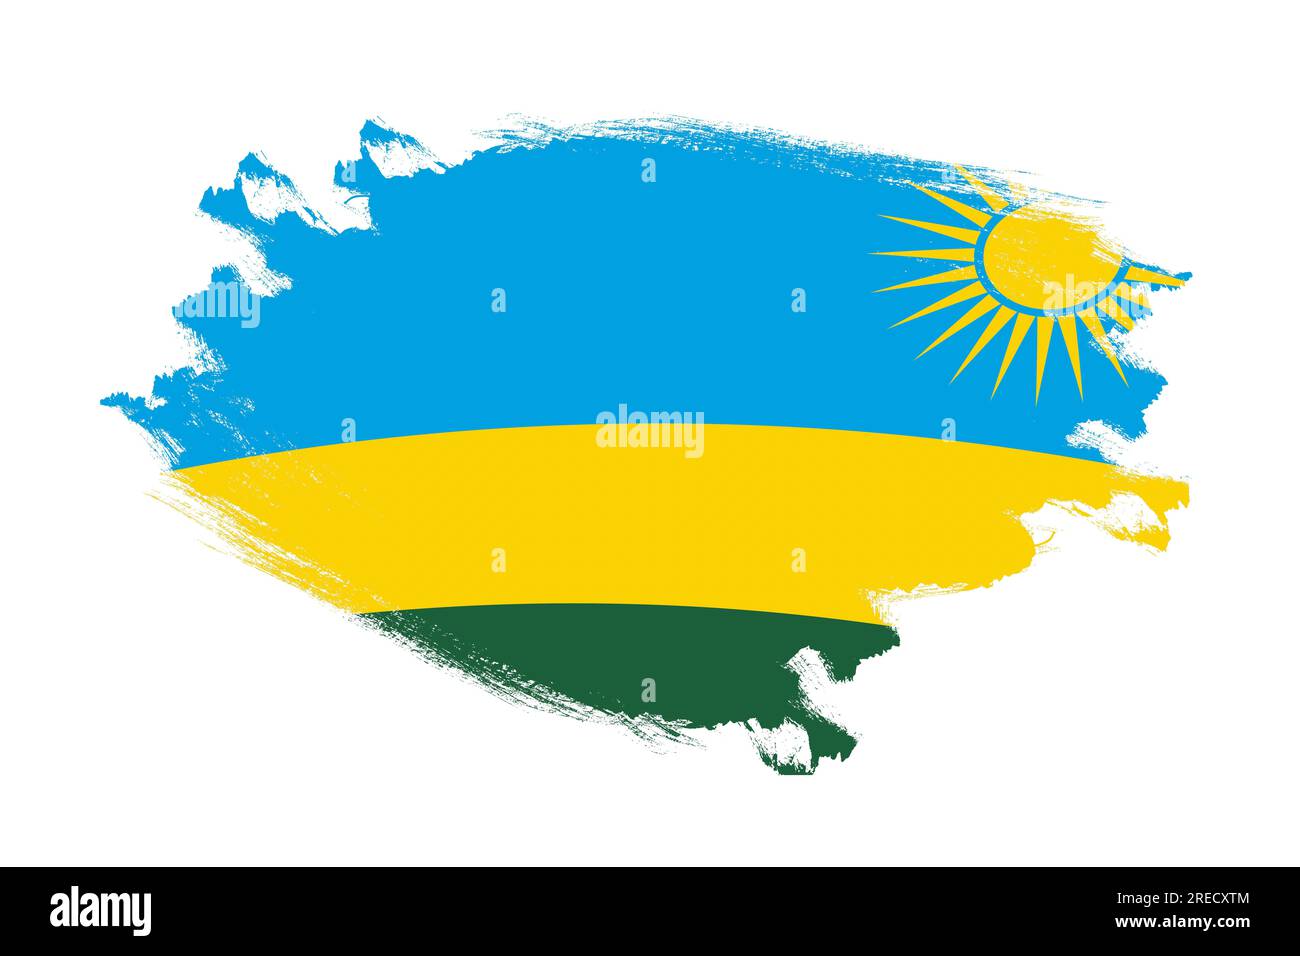 Abstract stroke brush textured national flag of Rwanda on isolated white background Stock Photo